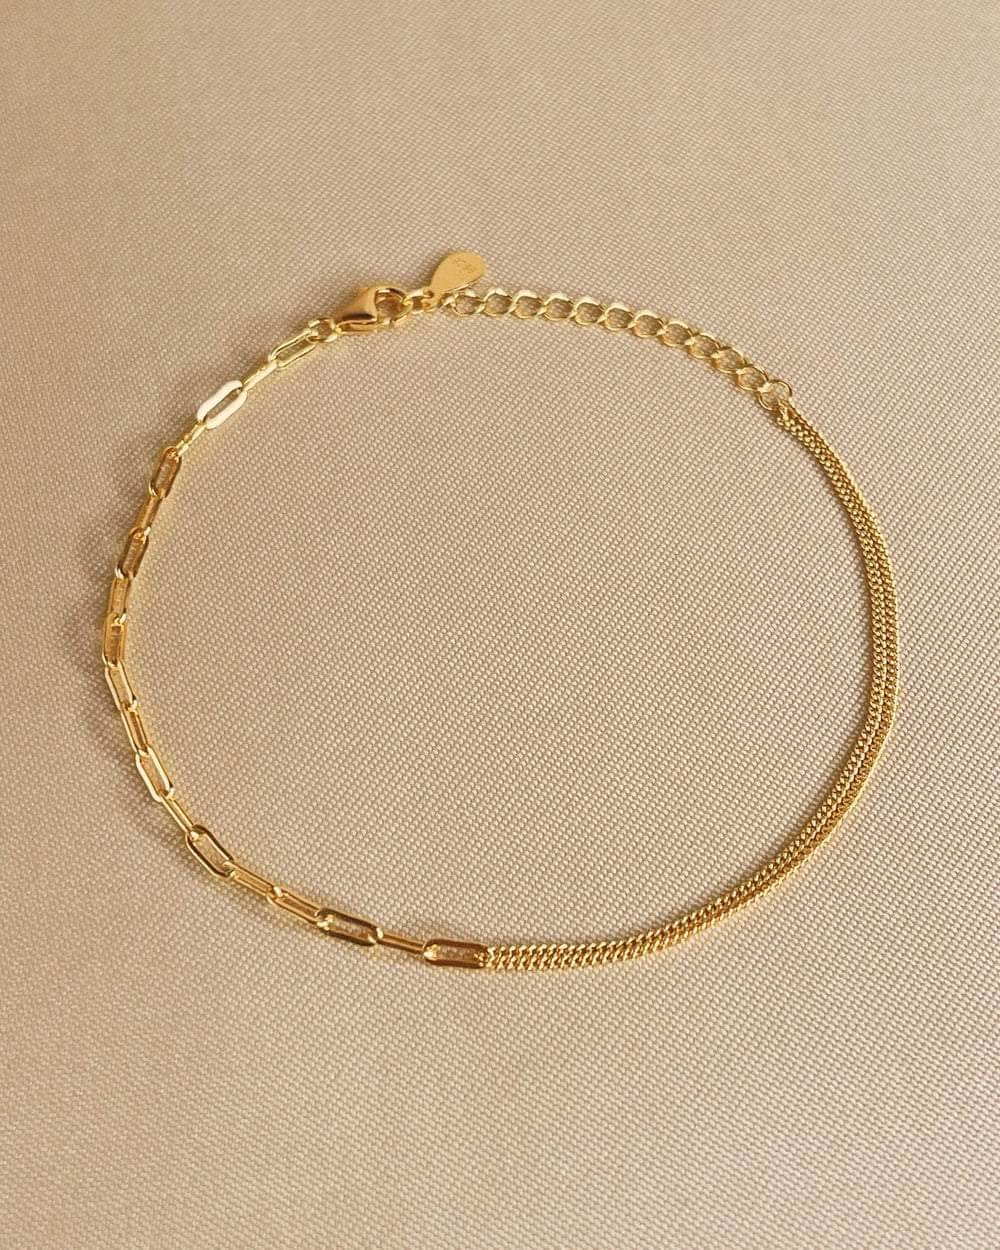 So Dainty Co. Bracelets Maxine Gold Bracelet Gold Plated 925 Sterling Silver Jewelry